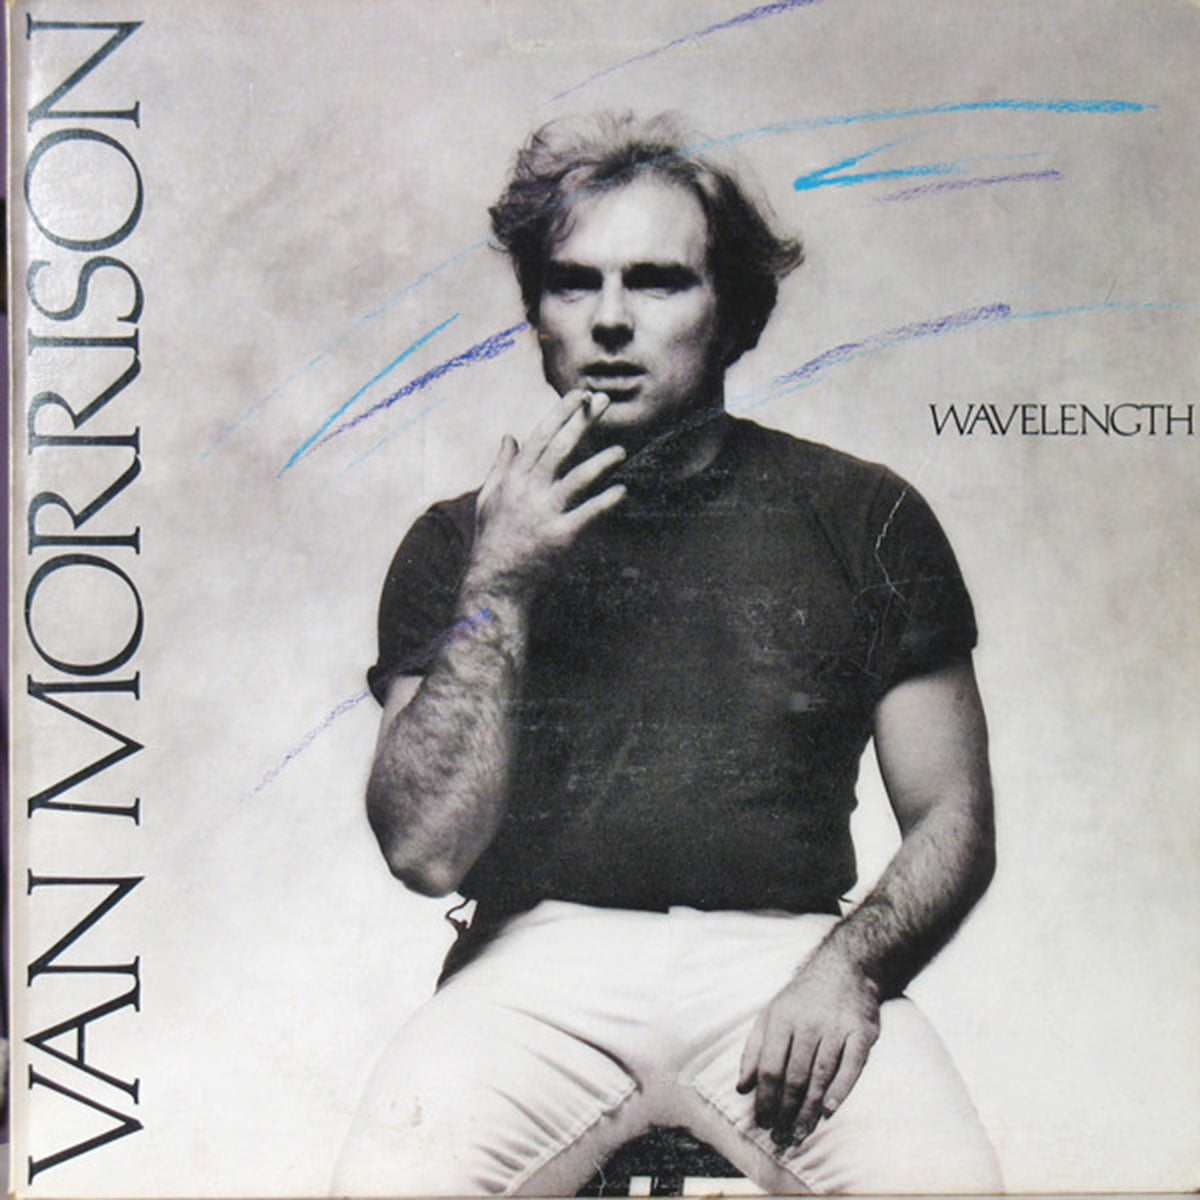 Van Morrison ‎– Wavelength - 1978